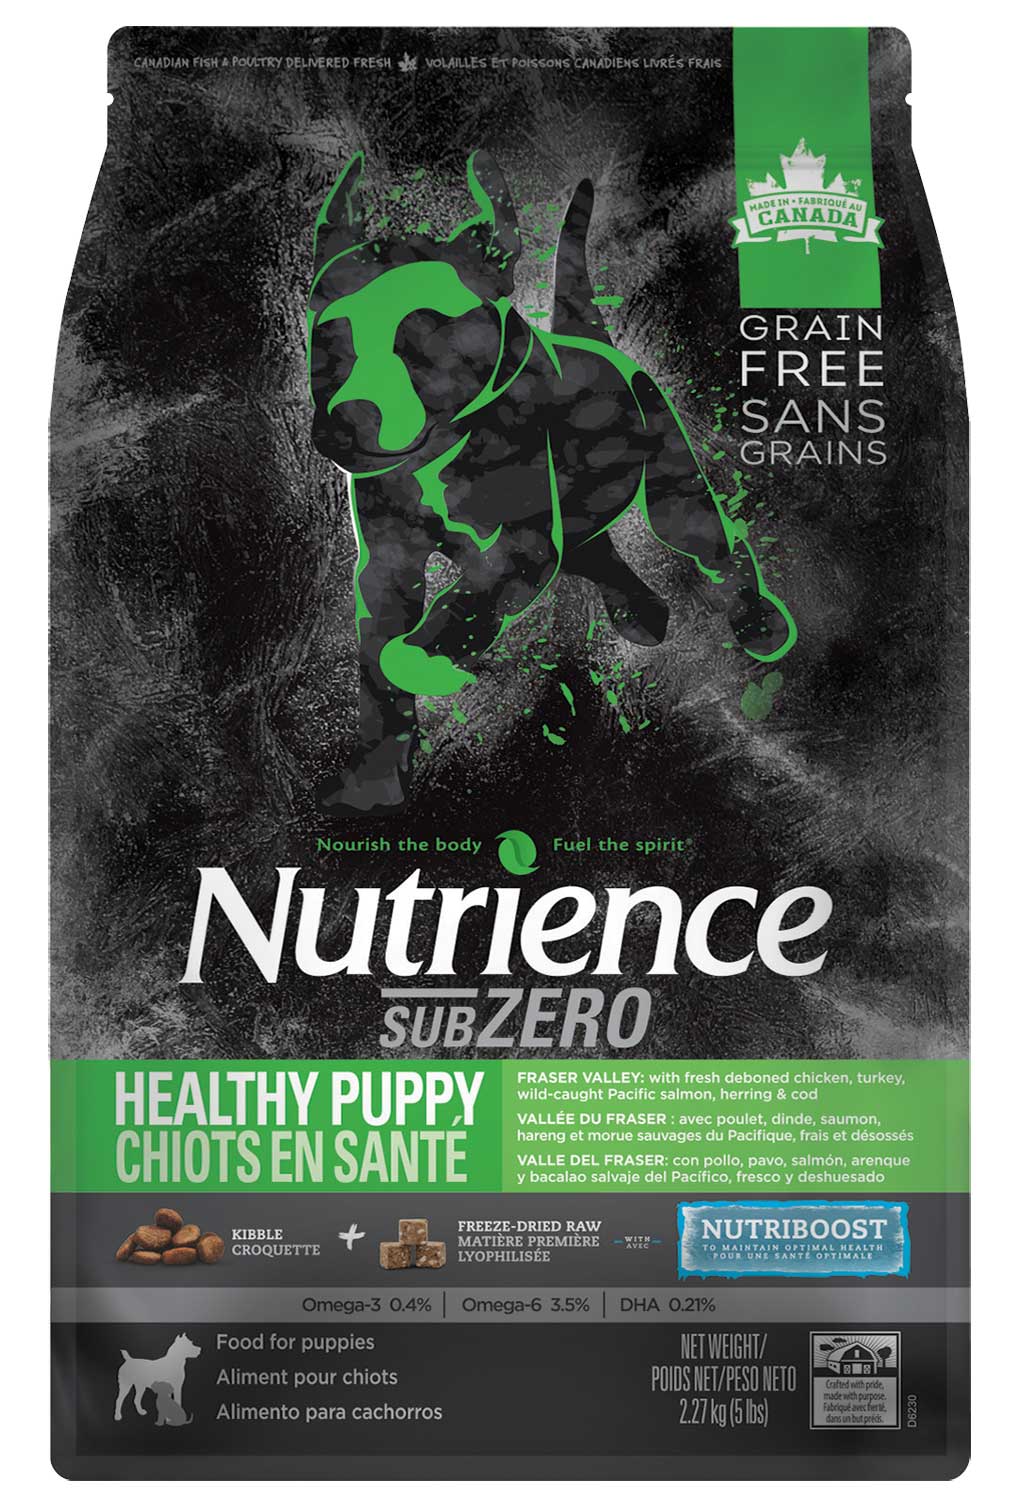 Nutrience Grain Free Subzero Dog Food Review (Dry)